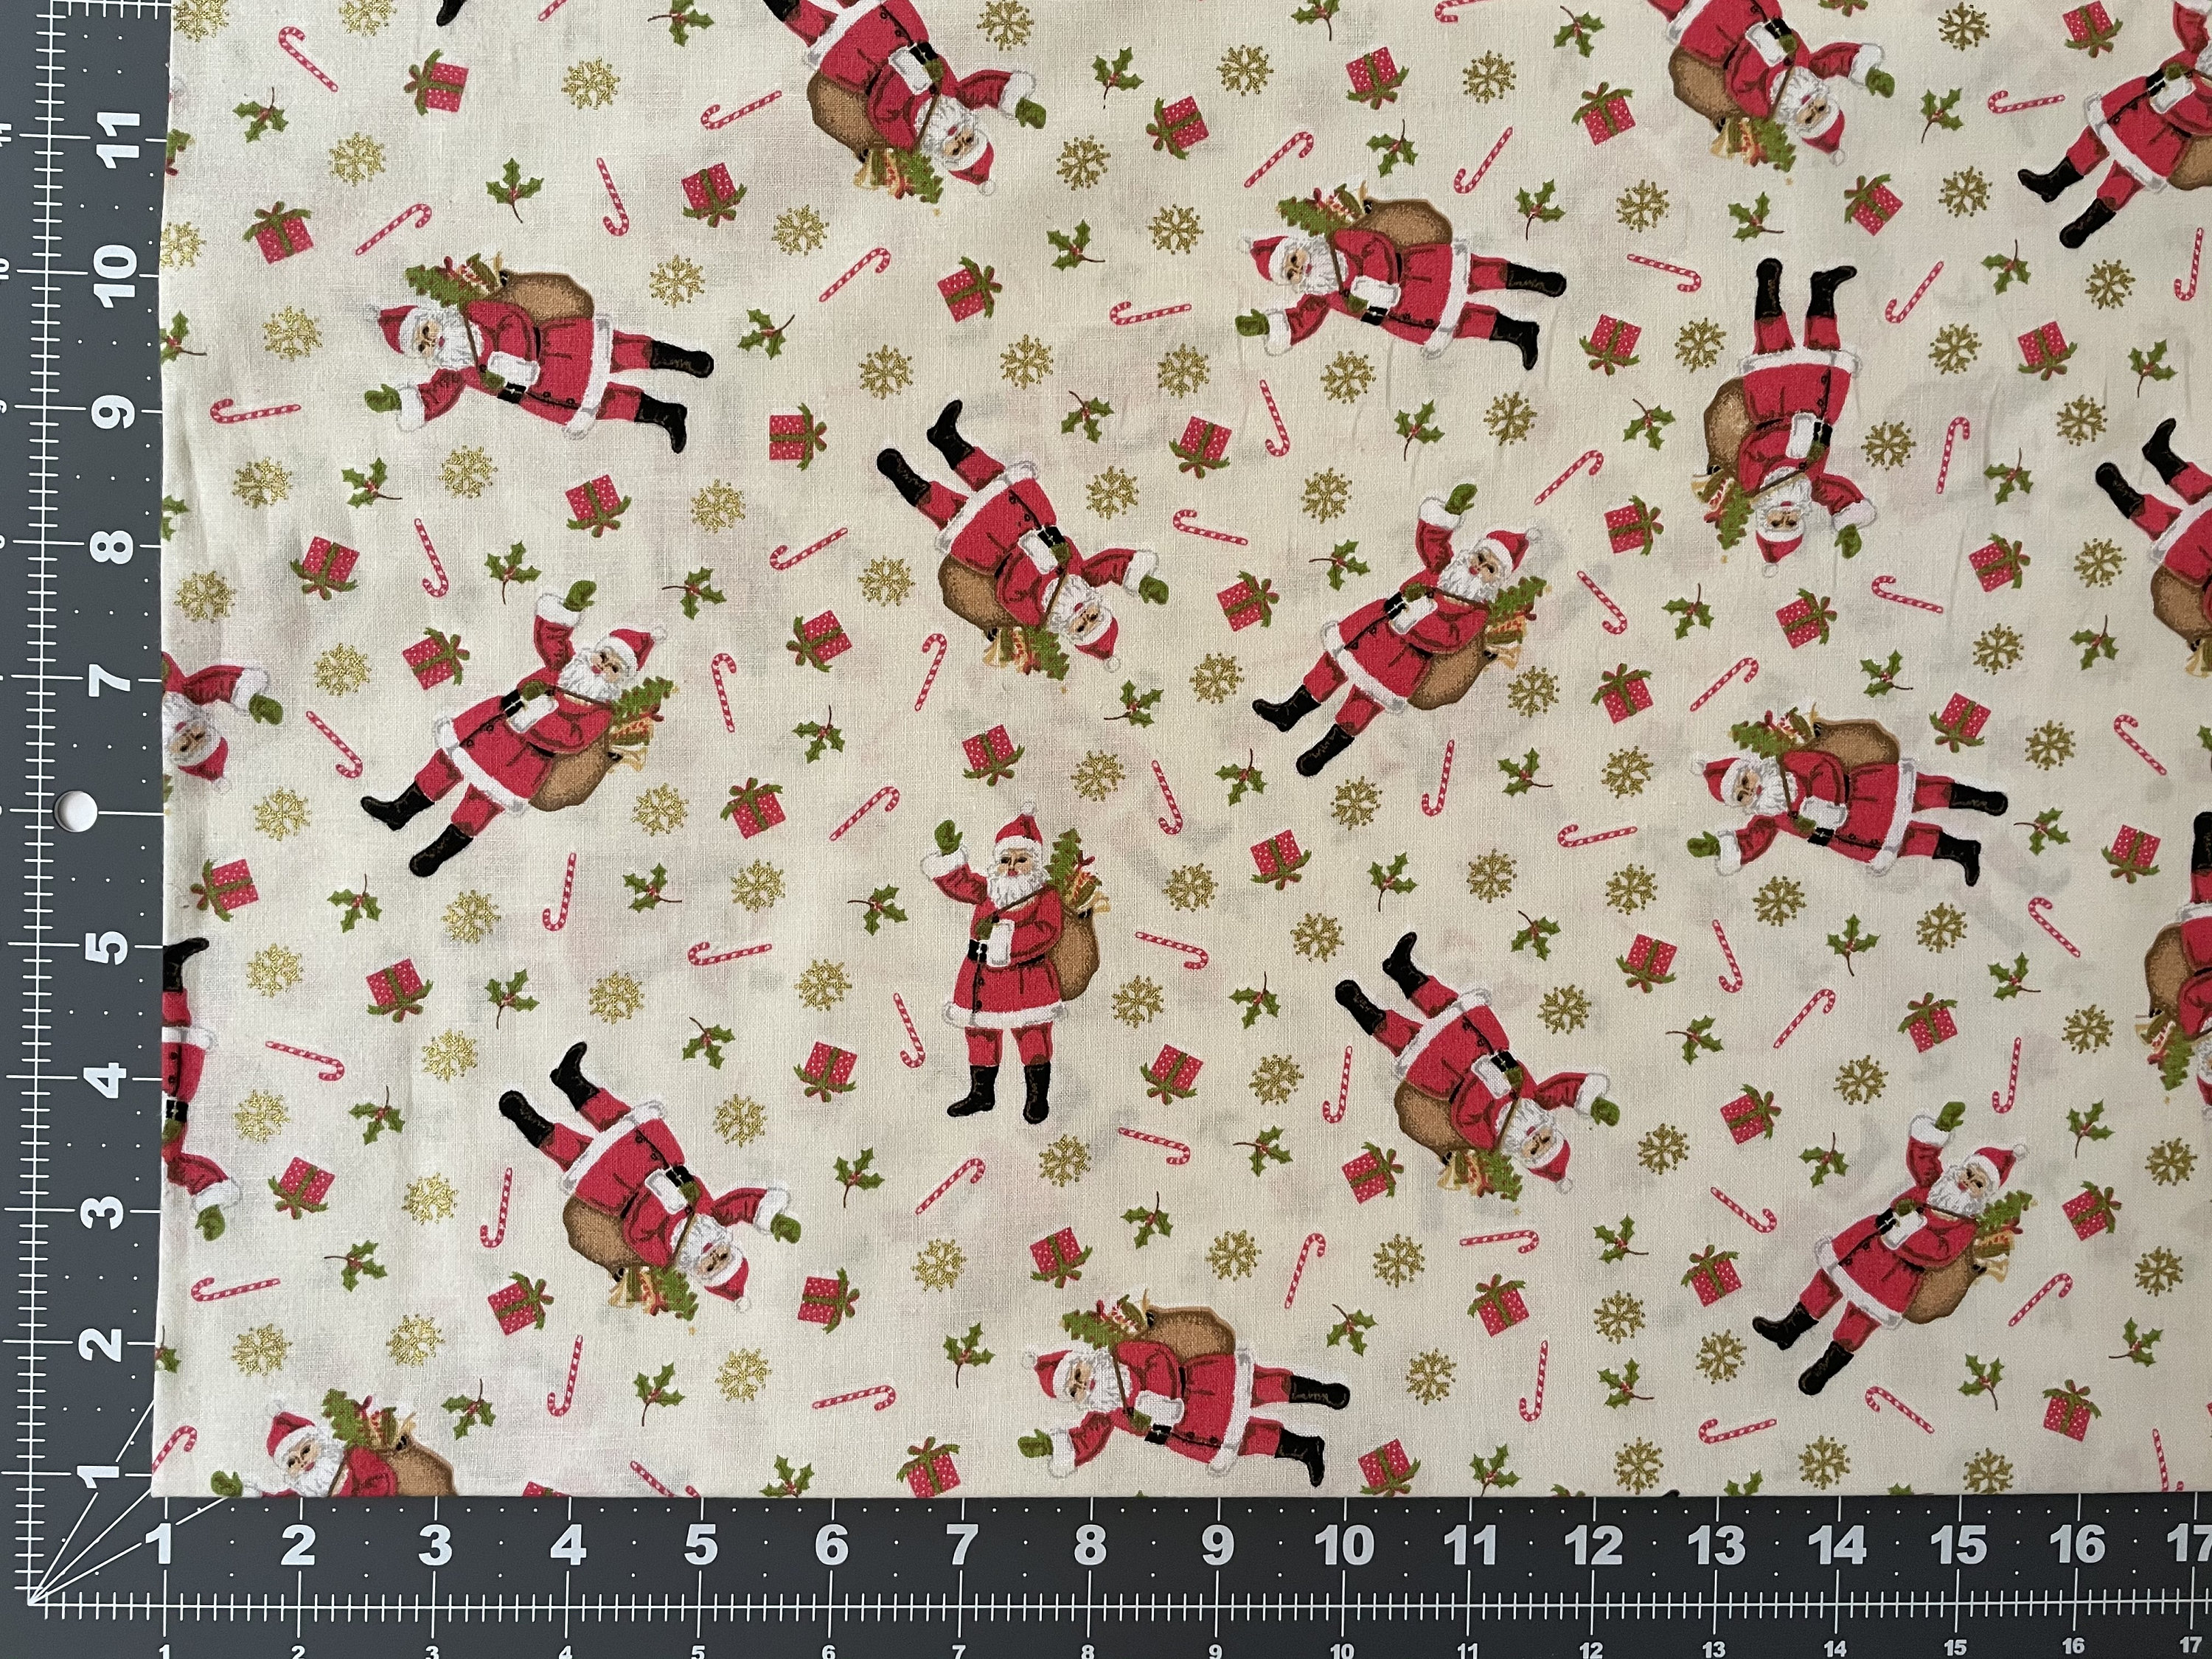 Letters to Santa Fabric, Christmas Fabric, 100% Cotton, Stockings Fabric,  Fabric by the Yard, Tree Skirts Fabric, Holiday & Seasonal 